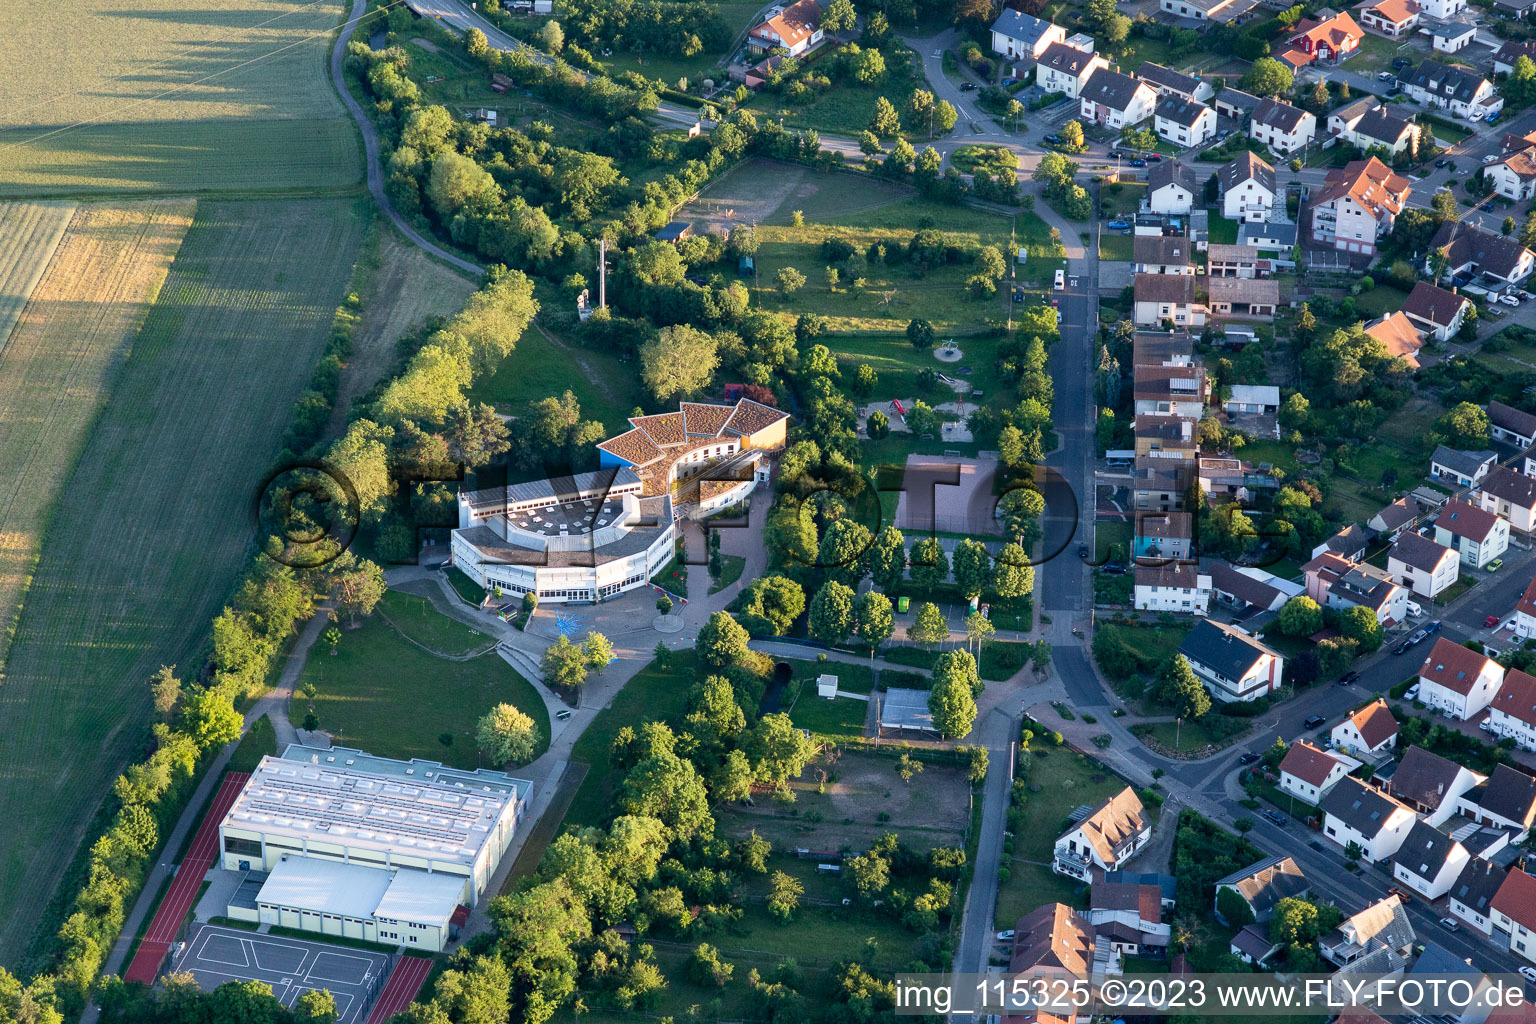 Adolf-Kußmaul School in the district Graben in Graben-Neudorf in the state Baden-Wuerttemberg, Germany